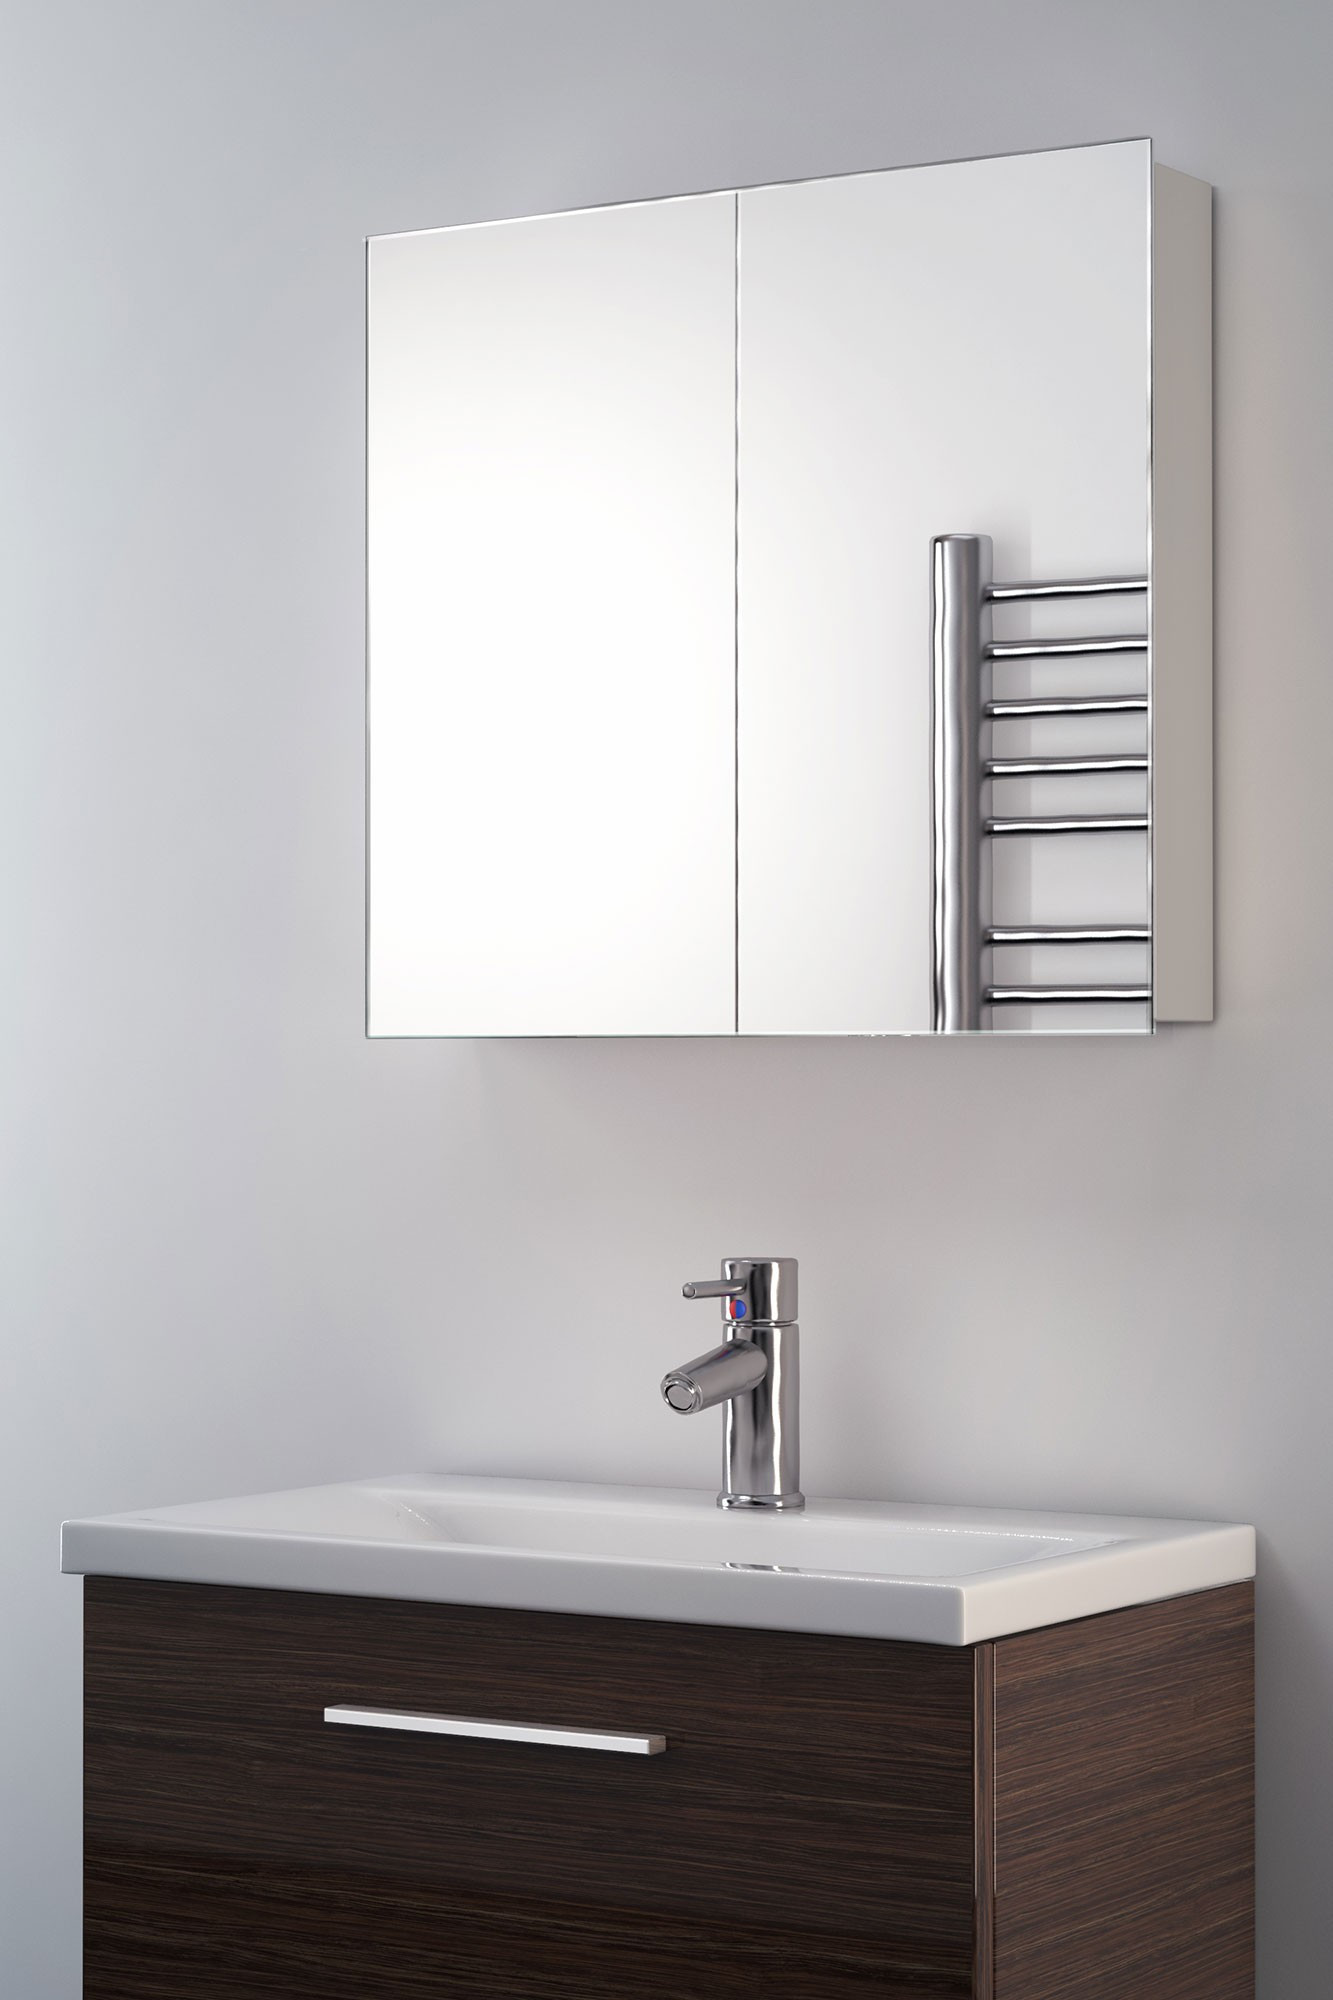 Mirrored Bathroom Cabinet
 Eleanor mirrored bathroom cabinet H 600mm x W 650mm x D